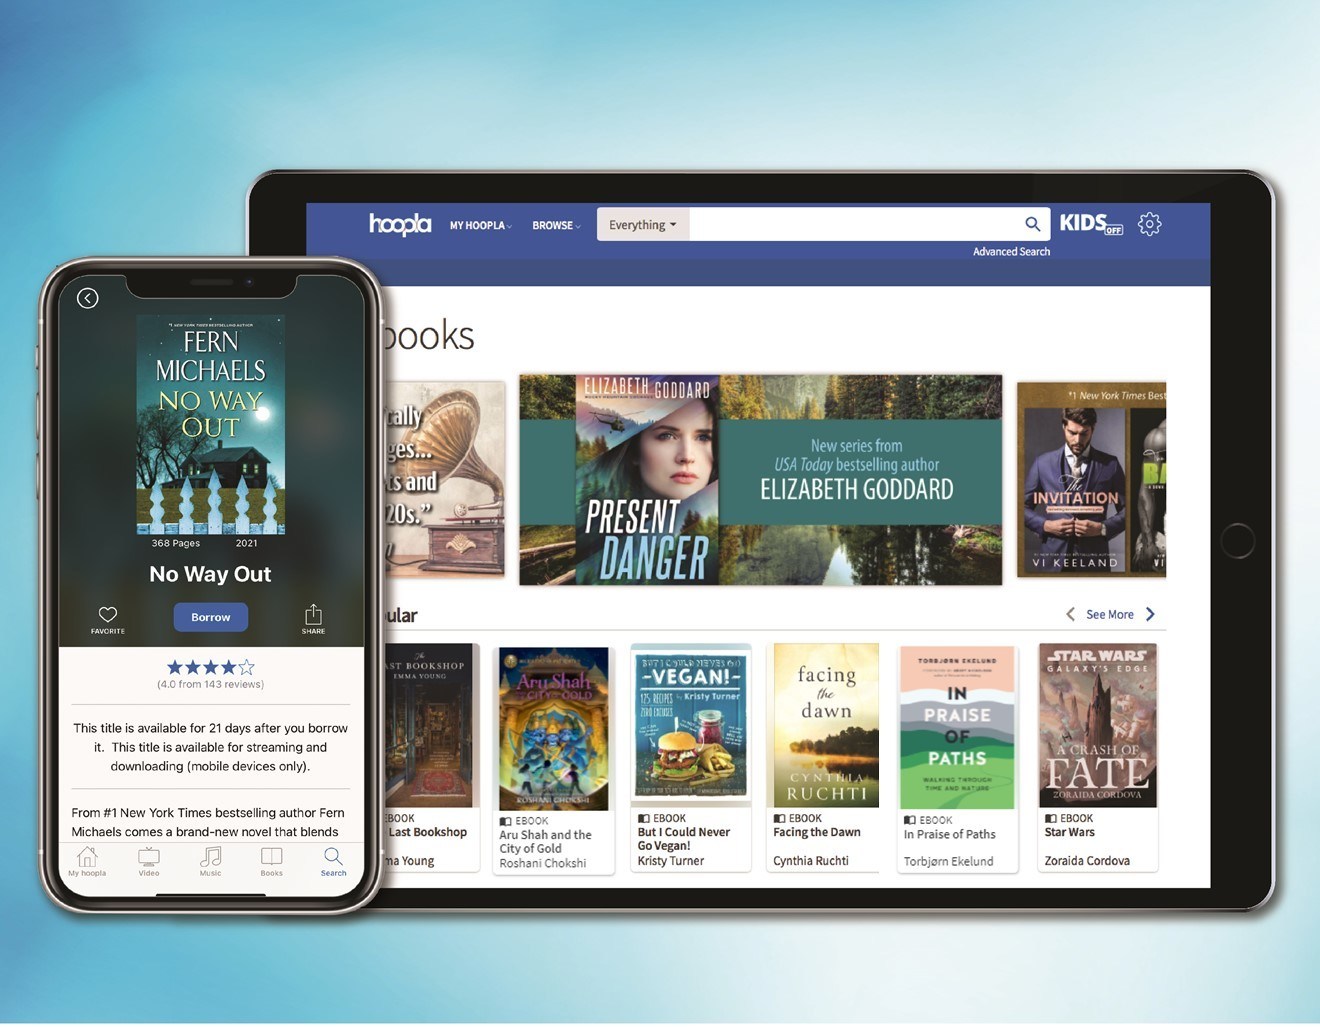 Hoopla Digital Brings Its Dynamic Digital Library Content To Australia Its First International Market Beyond North America Pr Newswire Apac